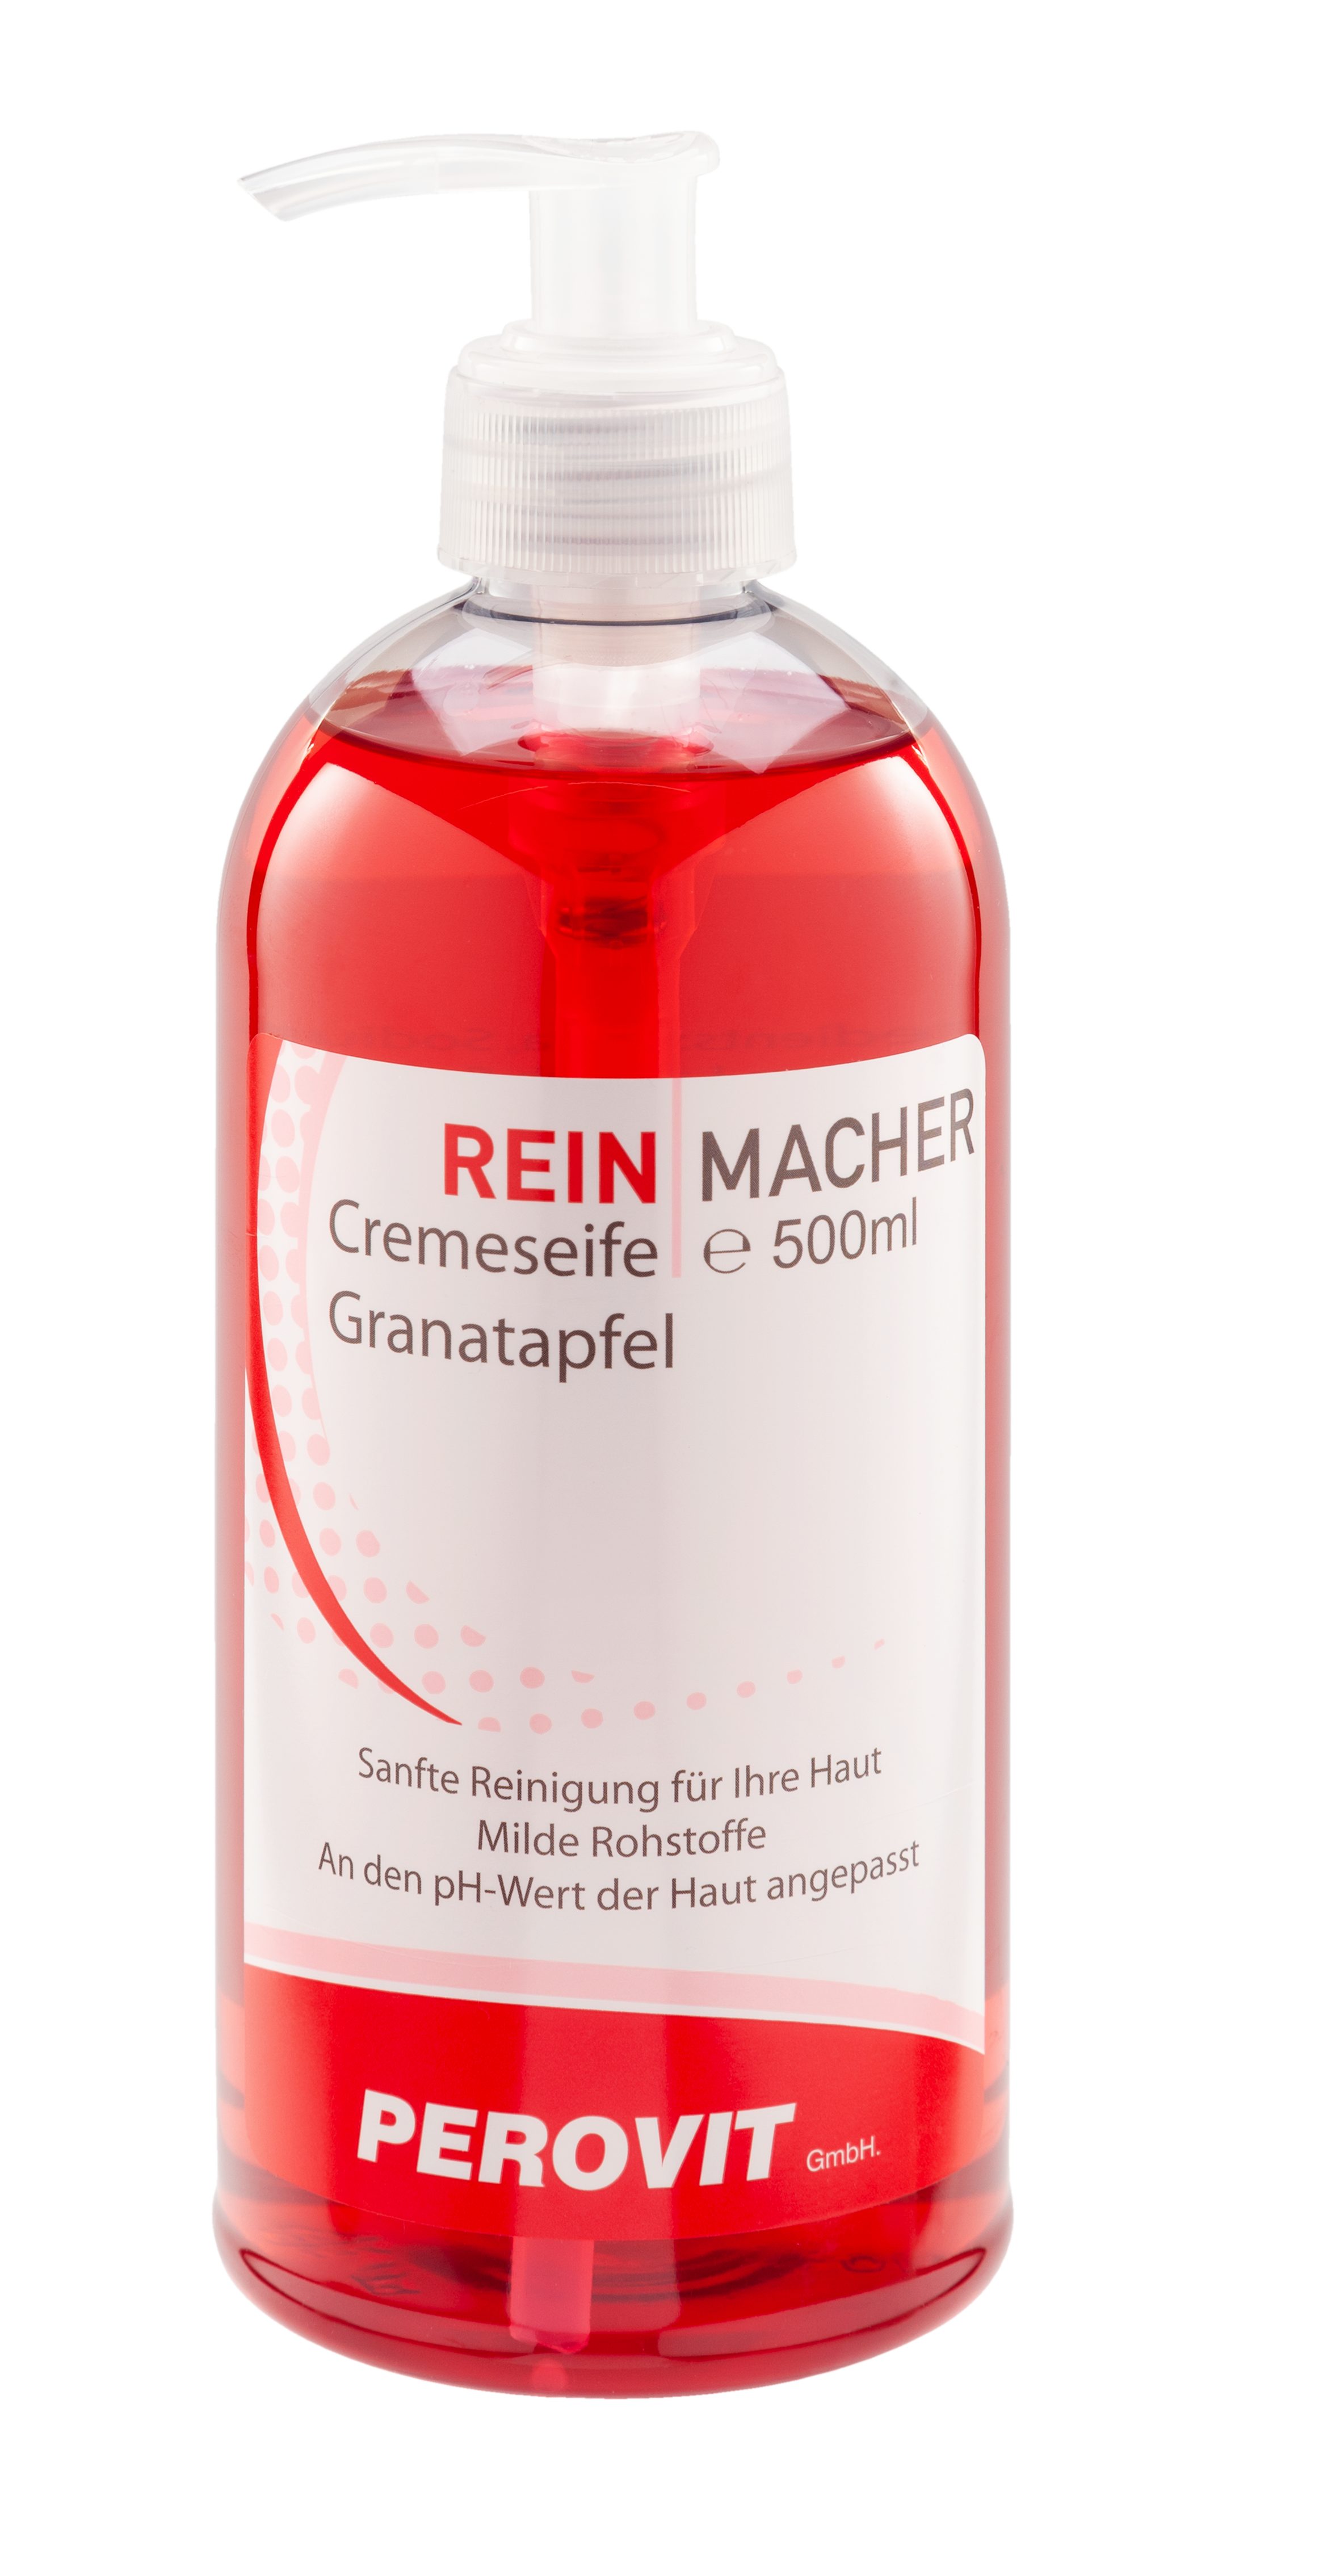 Granatapfel Reinmacher ml HCR Handseife 500 Cremseife Hygiene